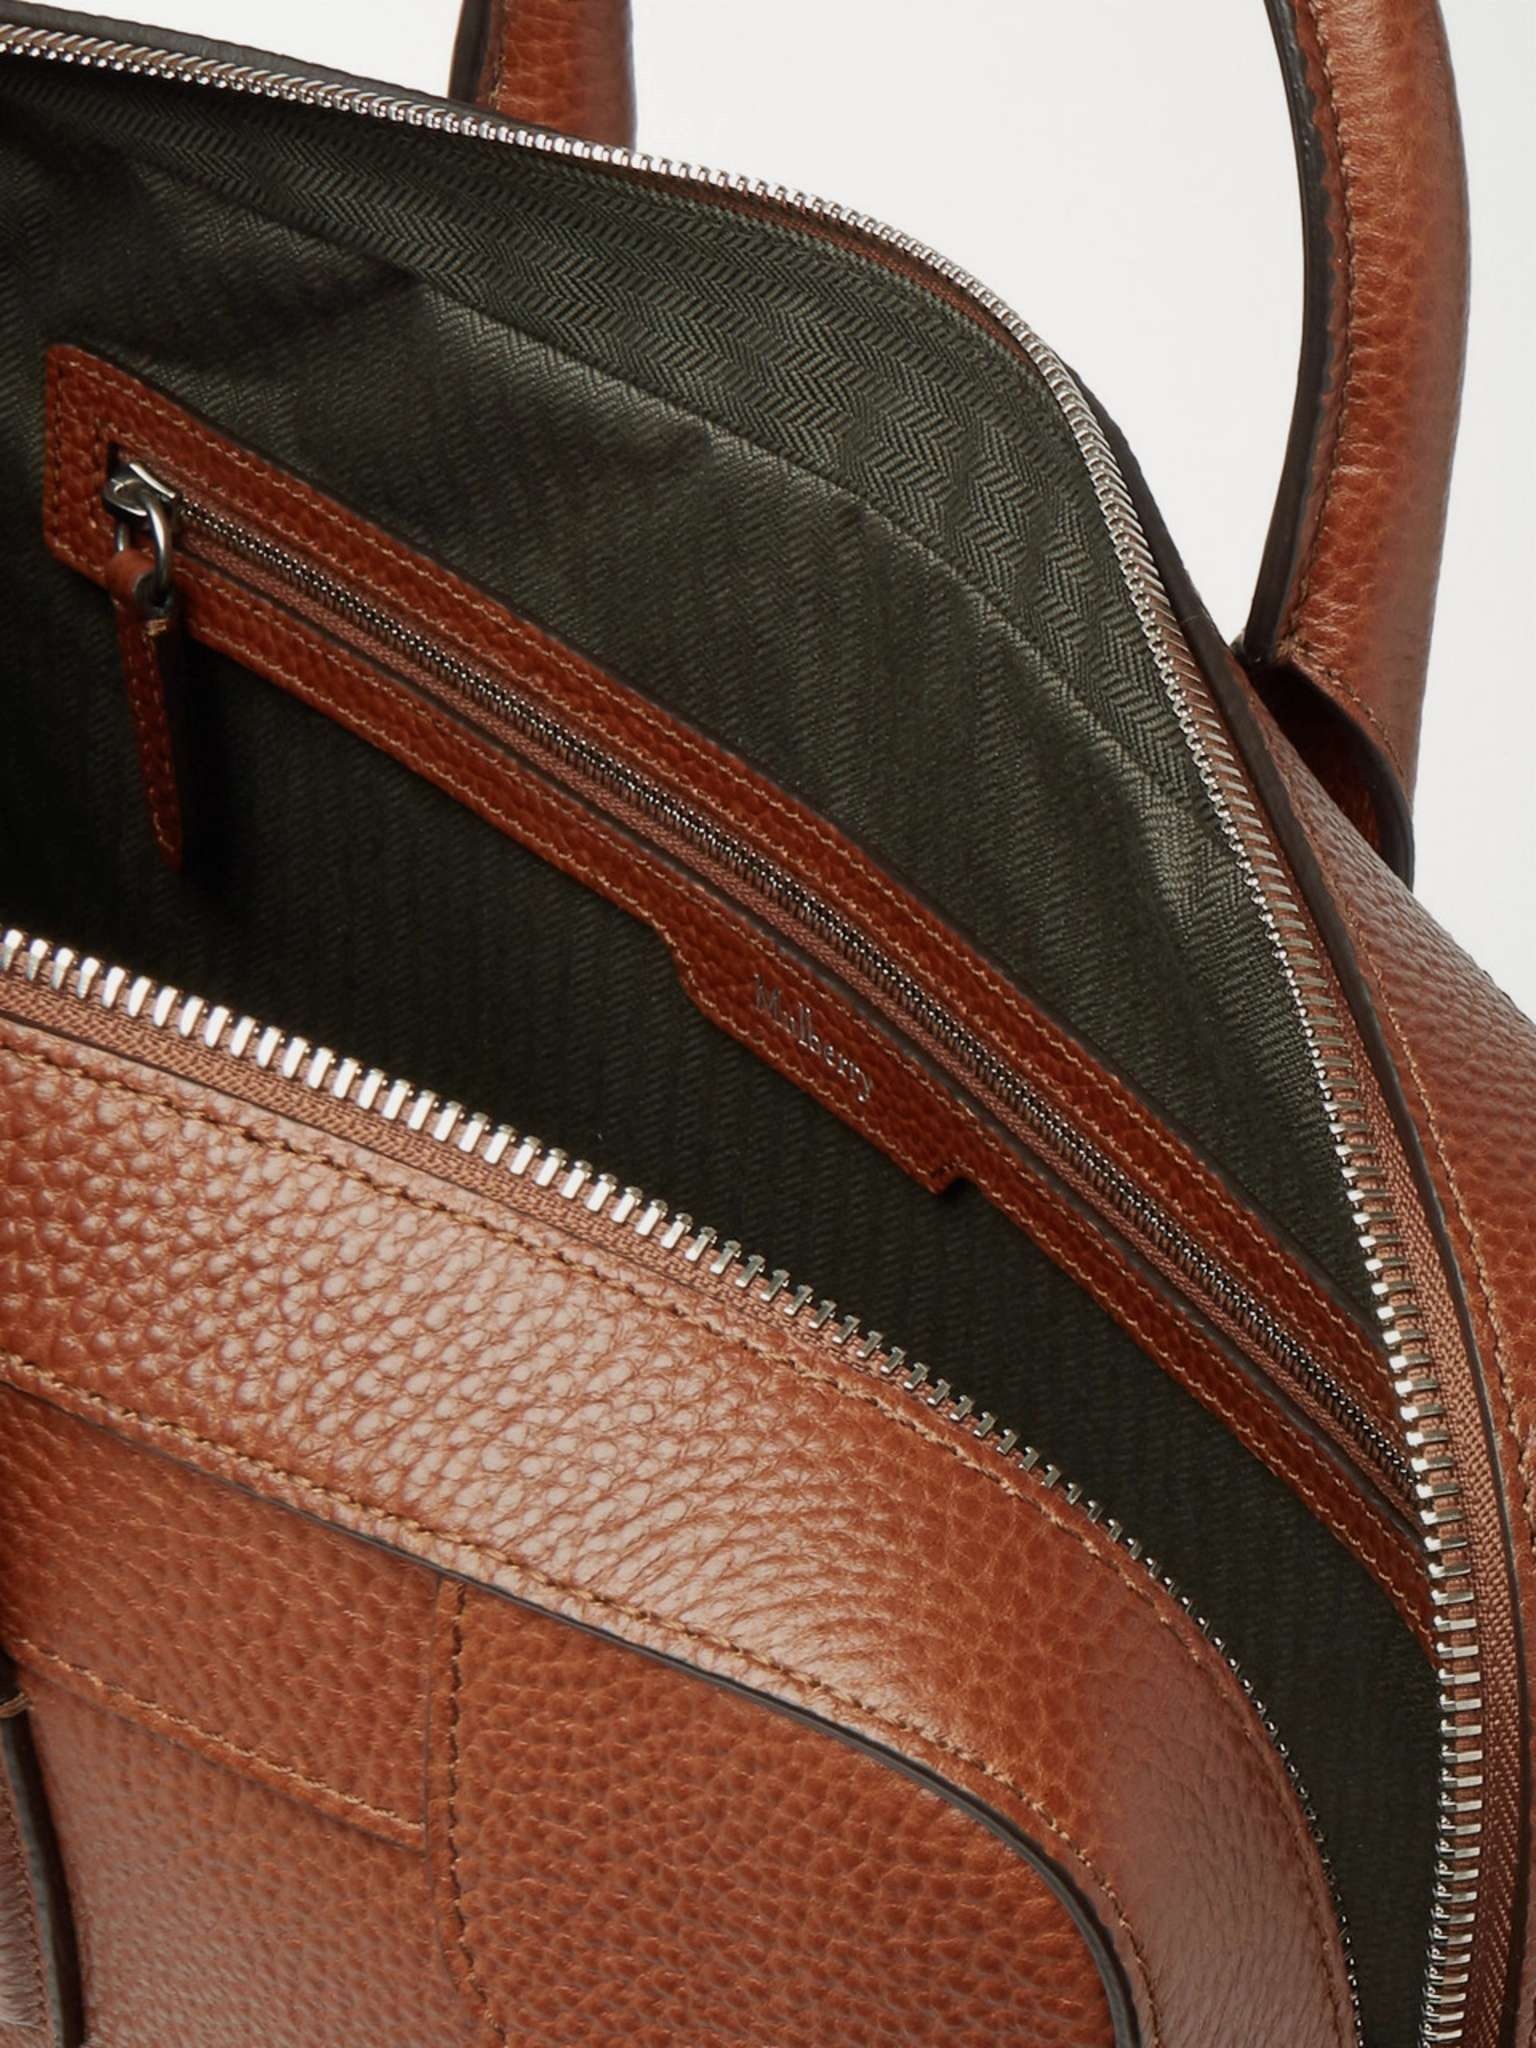 Belgrave Full-Grain Leather Briefcase - 3